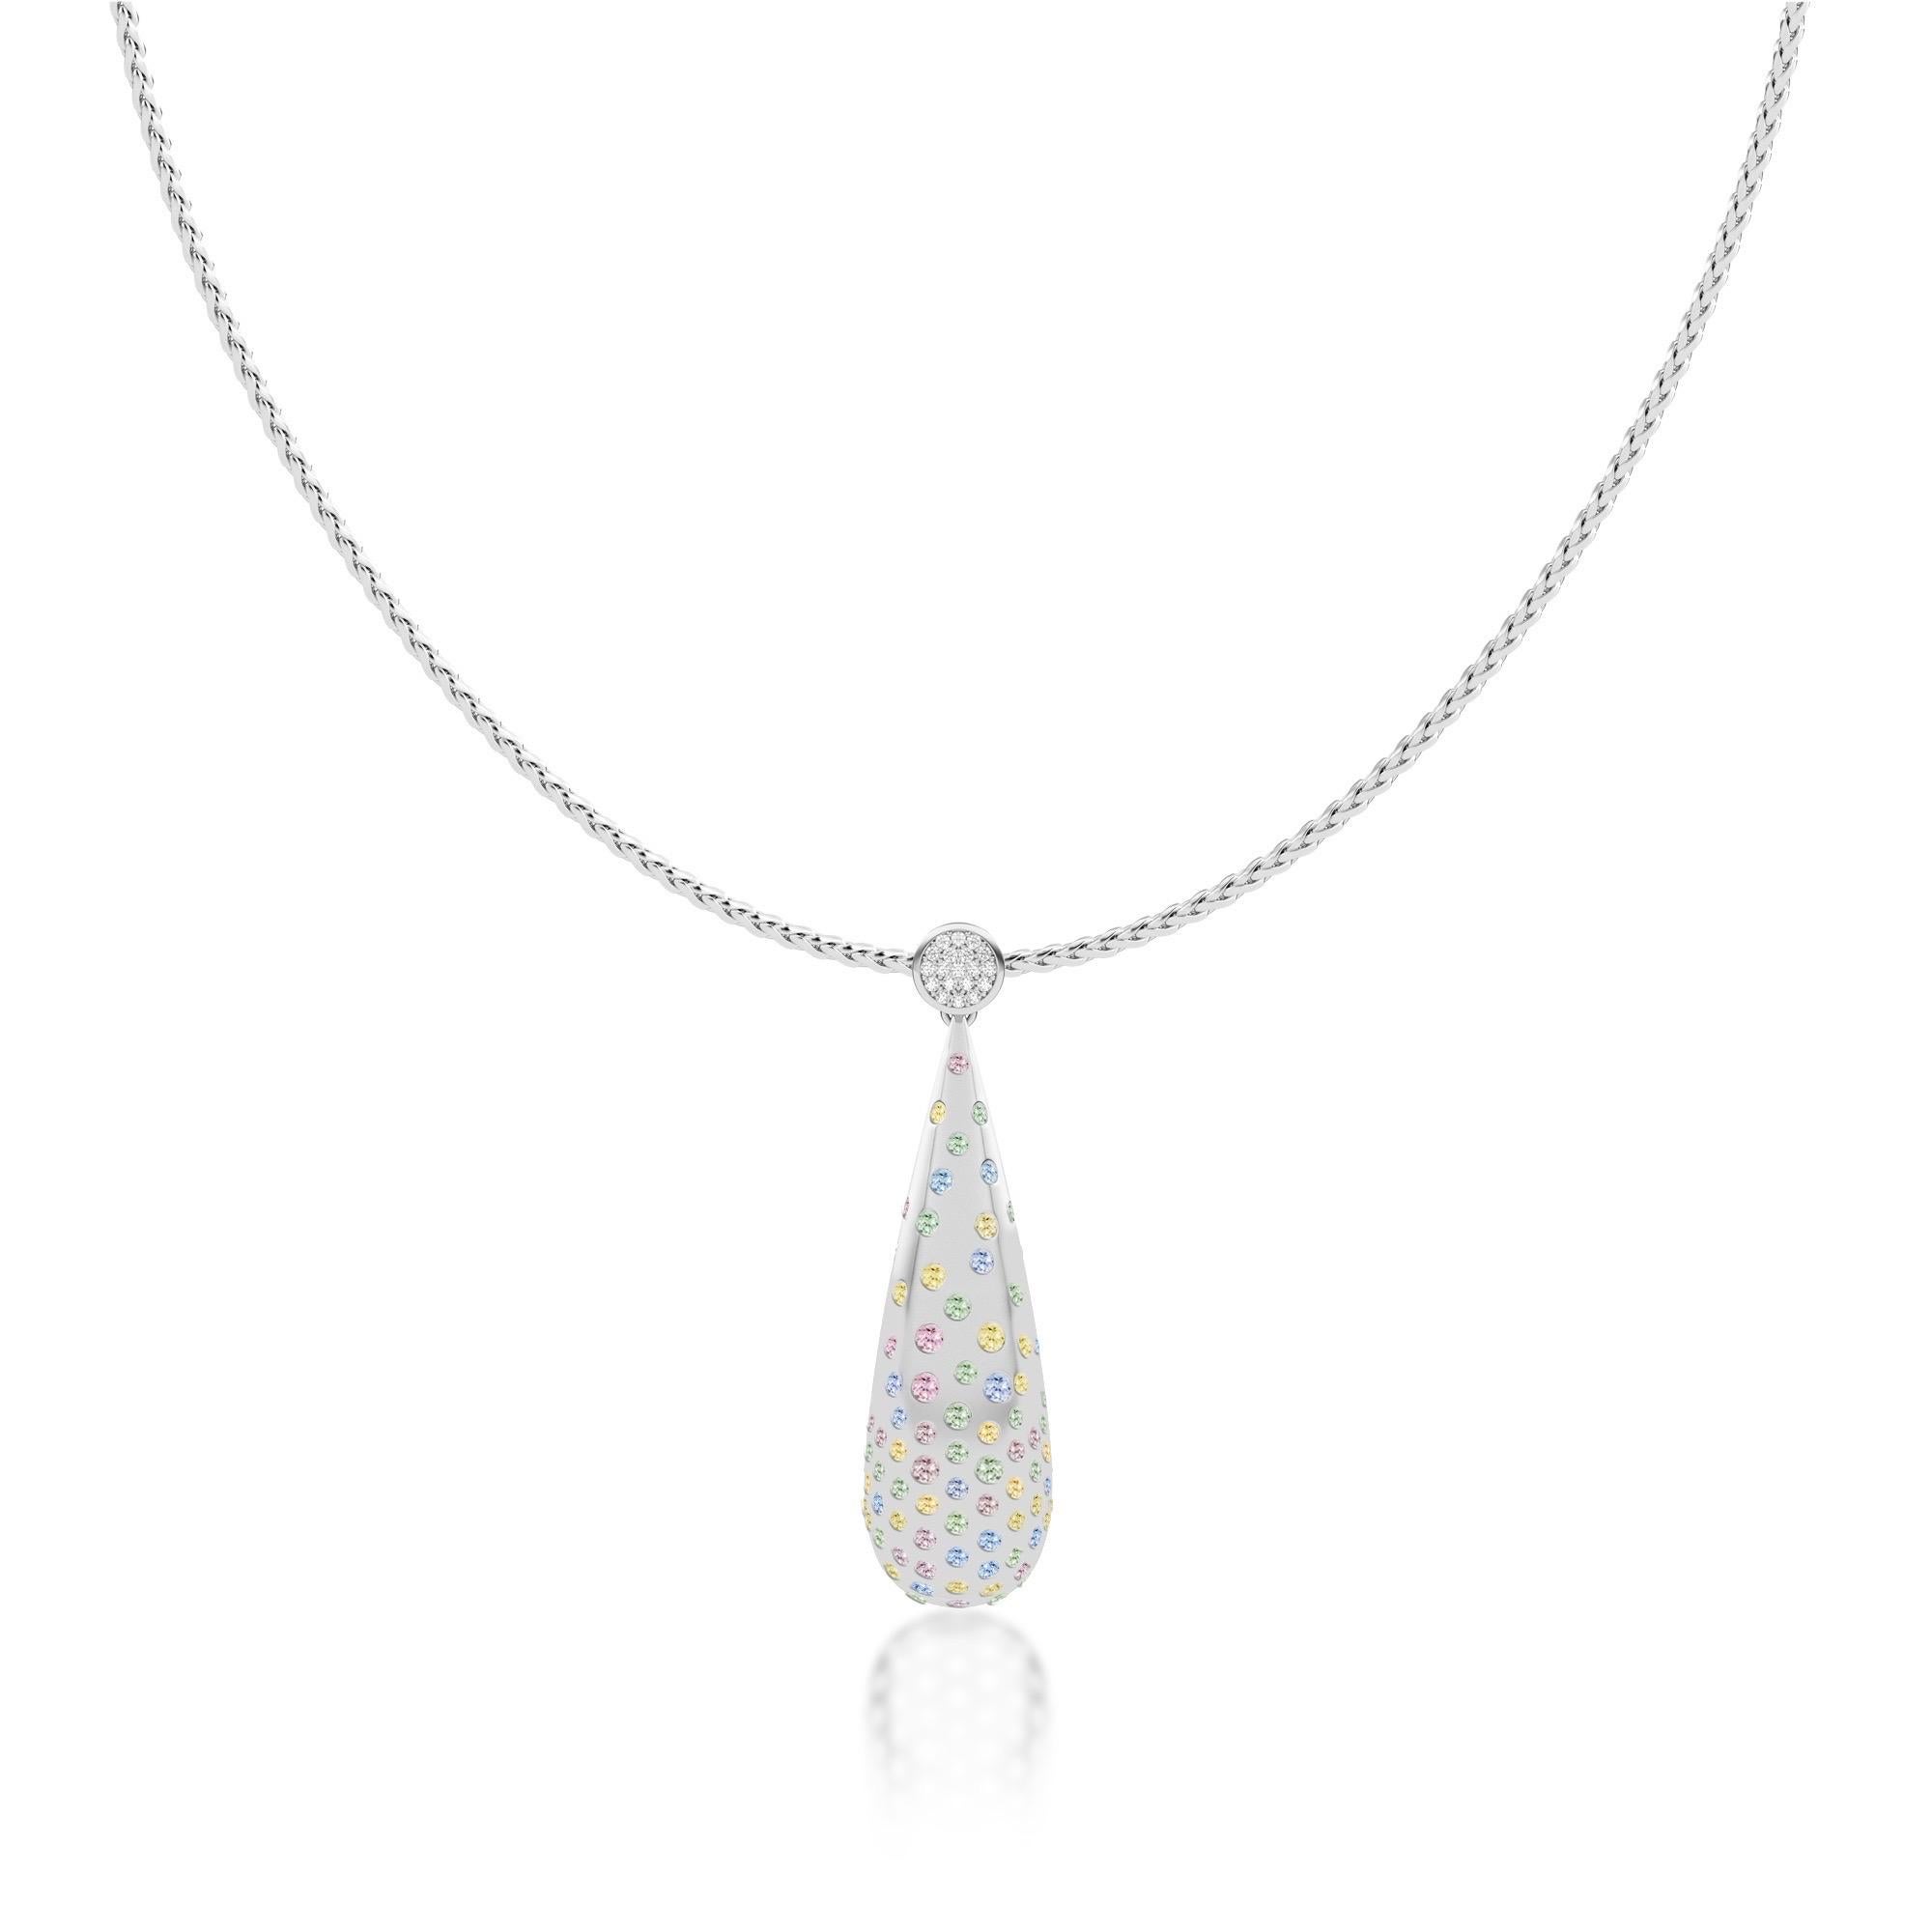 Ruben Manuel Designs “Spring” Pendant.
18K WG pear drop with pastel sapphires & VS white pave bail.